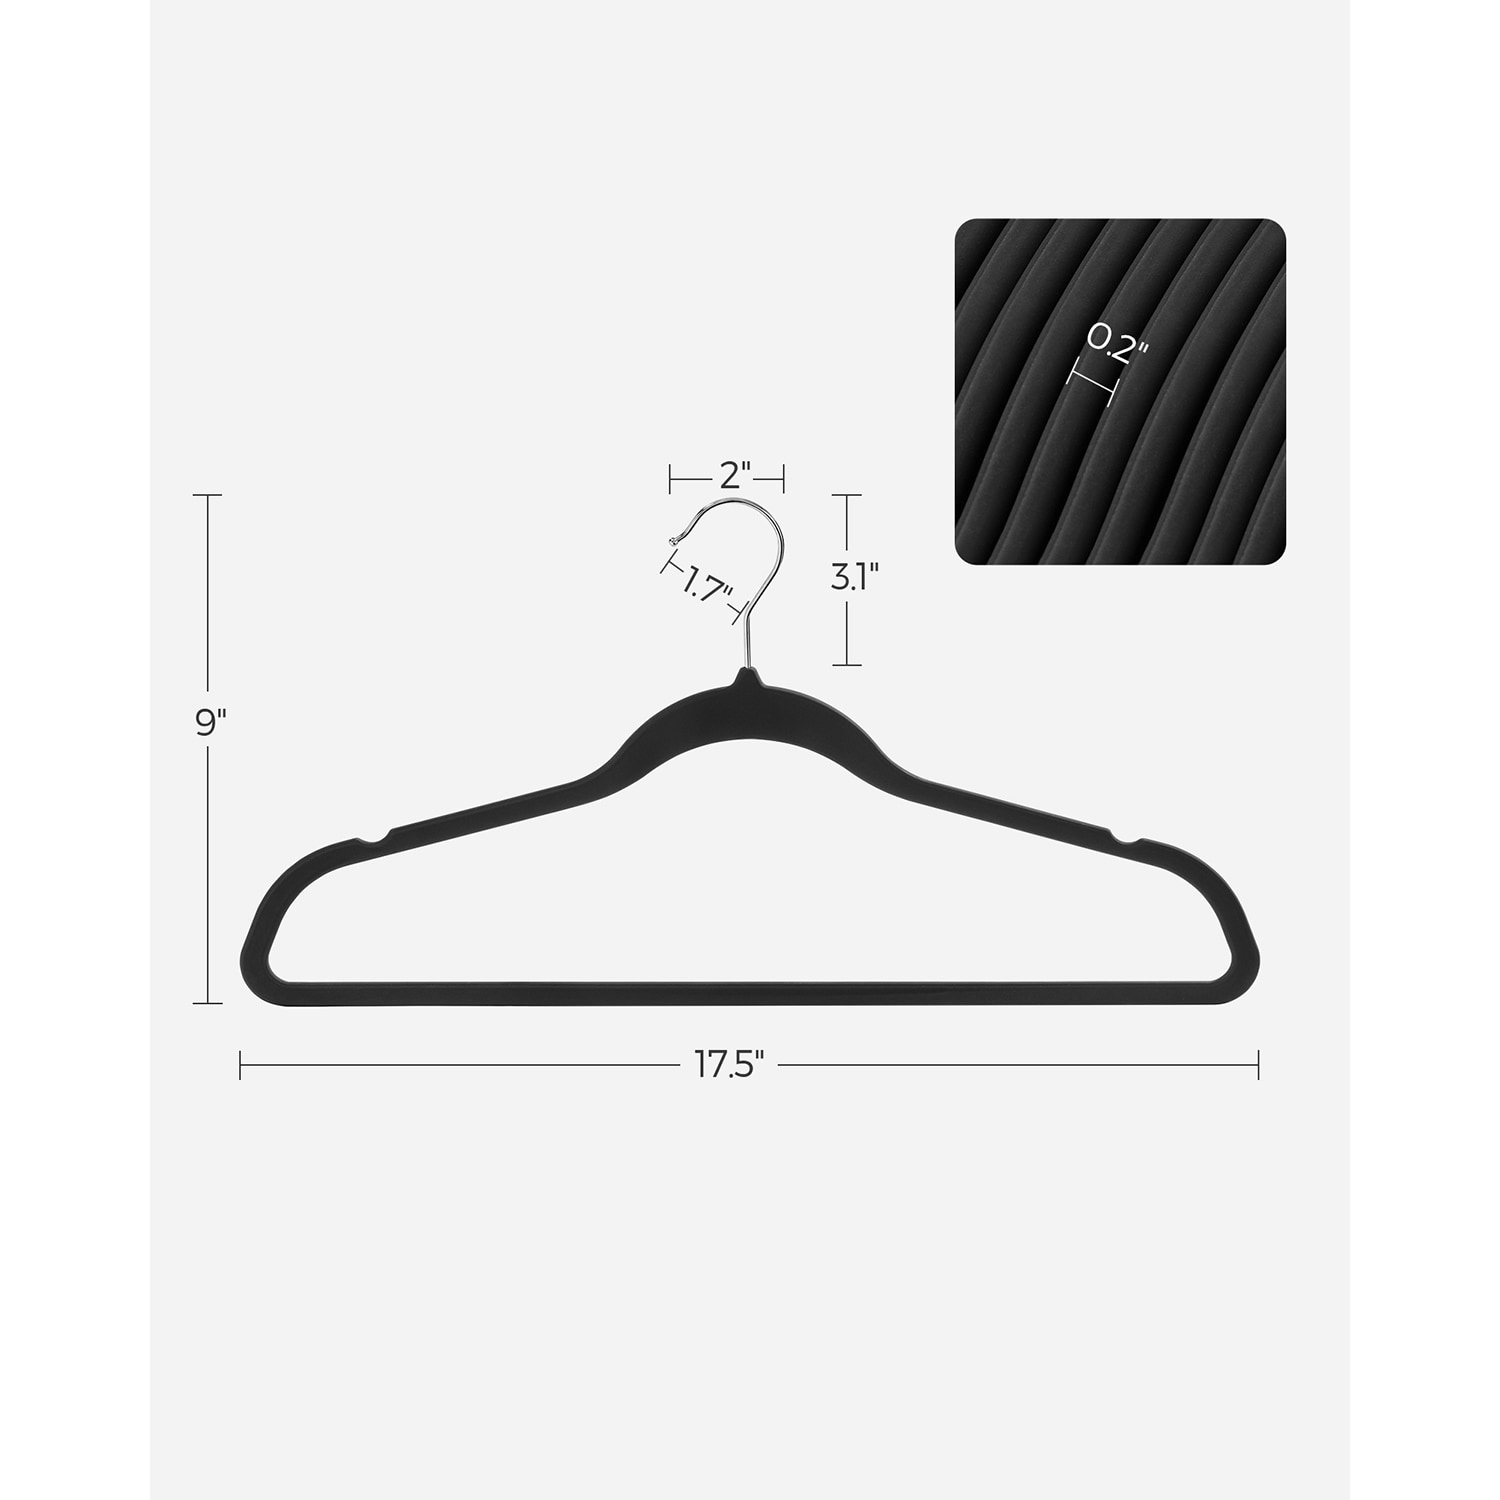 Elama 50-Pack Plastic Non-slip Grip Clothing Hanger (Gray) in the